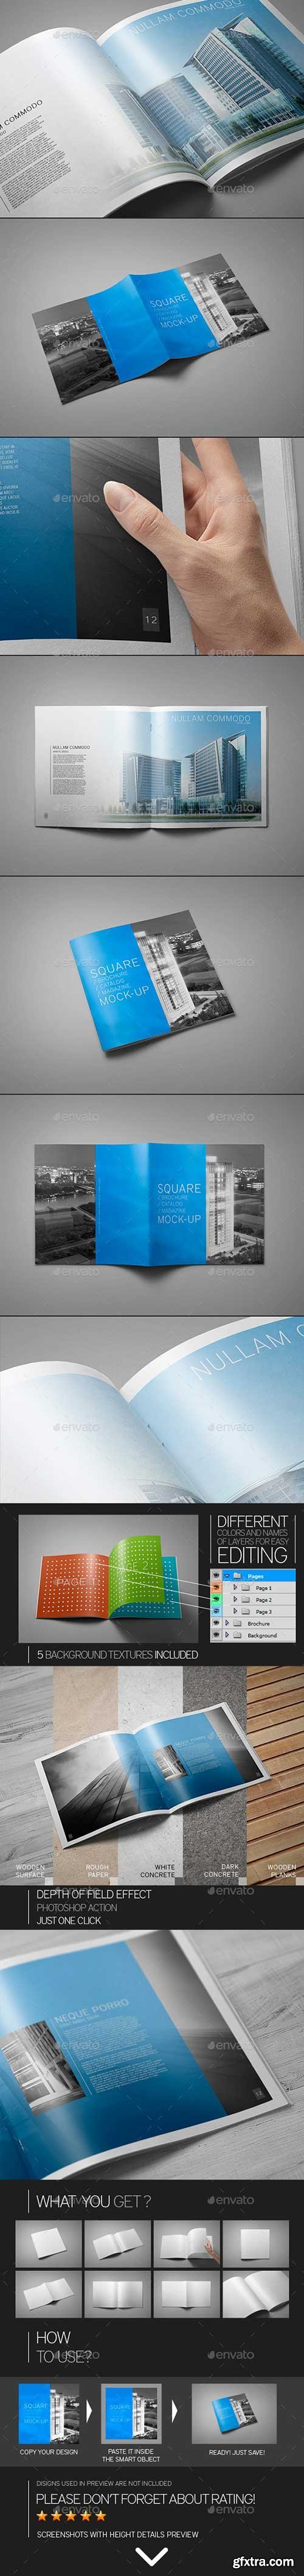 GraphicRiver - Square Brochure / Catalog / Magazine Mock-Up 8824672